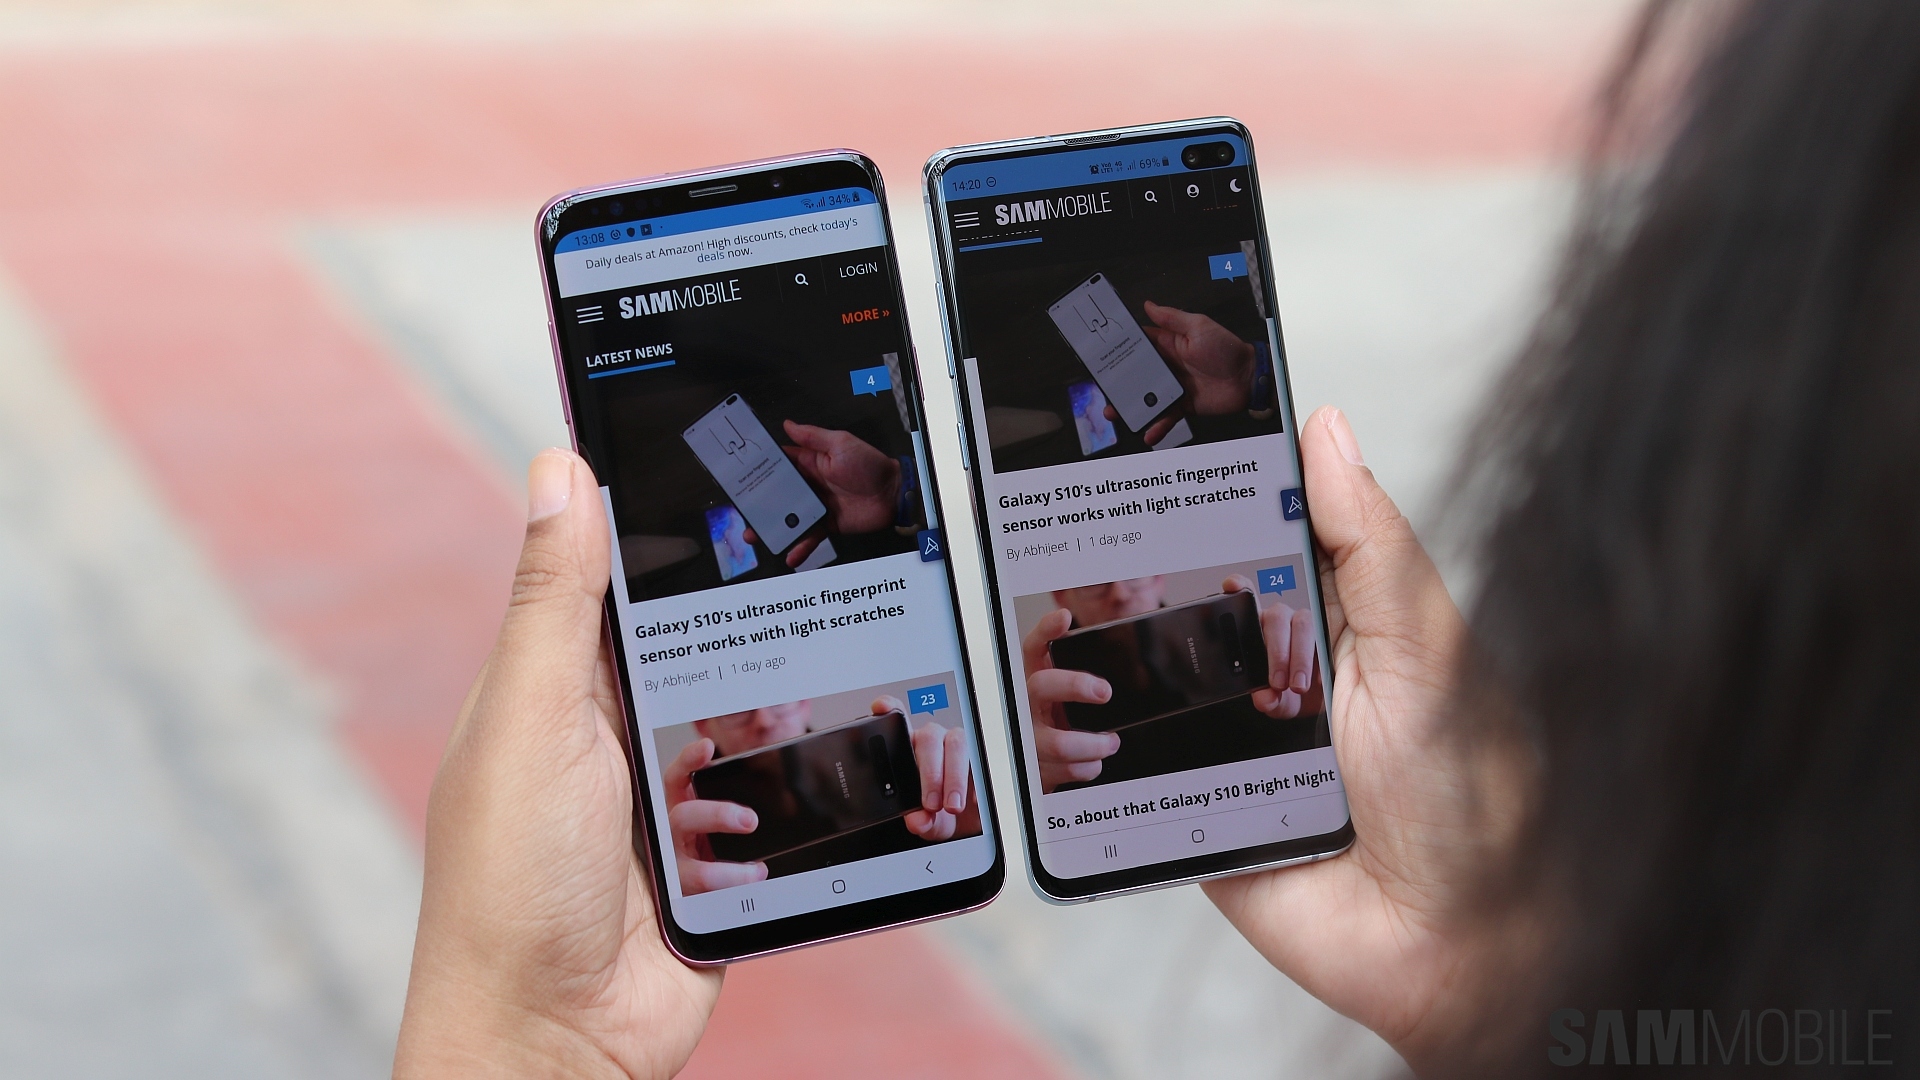 Galaxy S10+: Samsung Galaxy S10+ review: Premium design